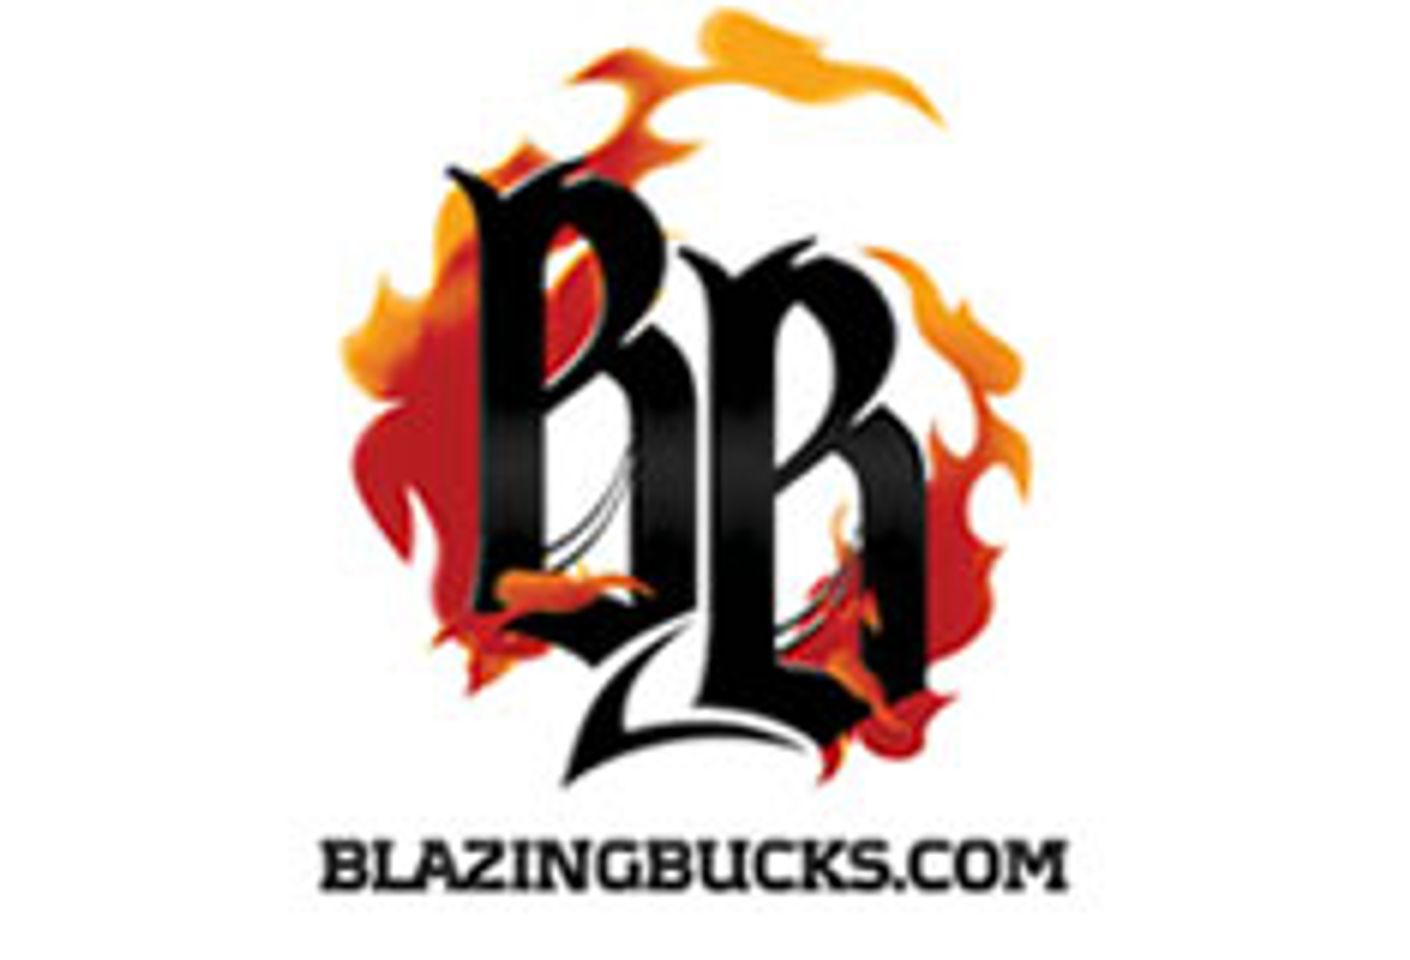 BlazingBucks.com Launches DylanRyder.com